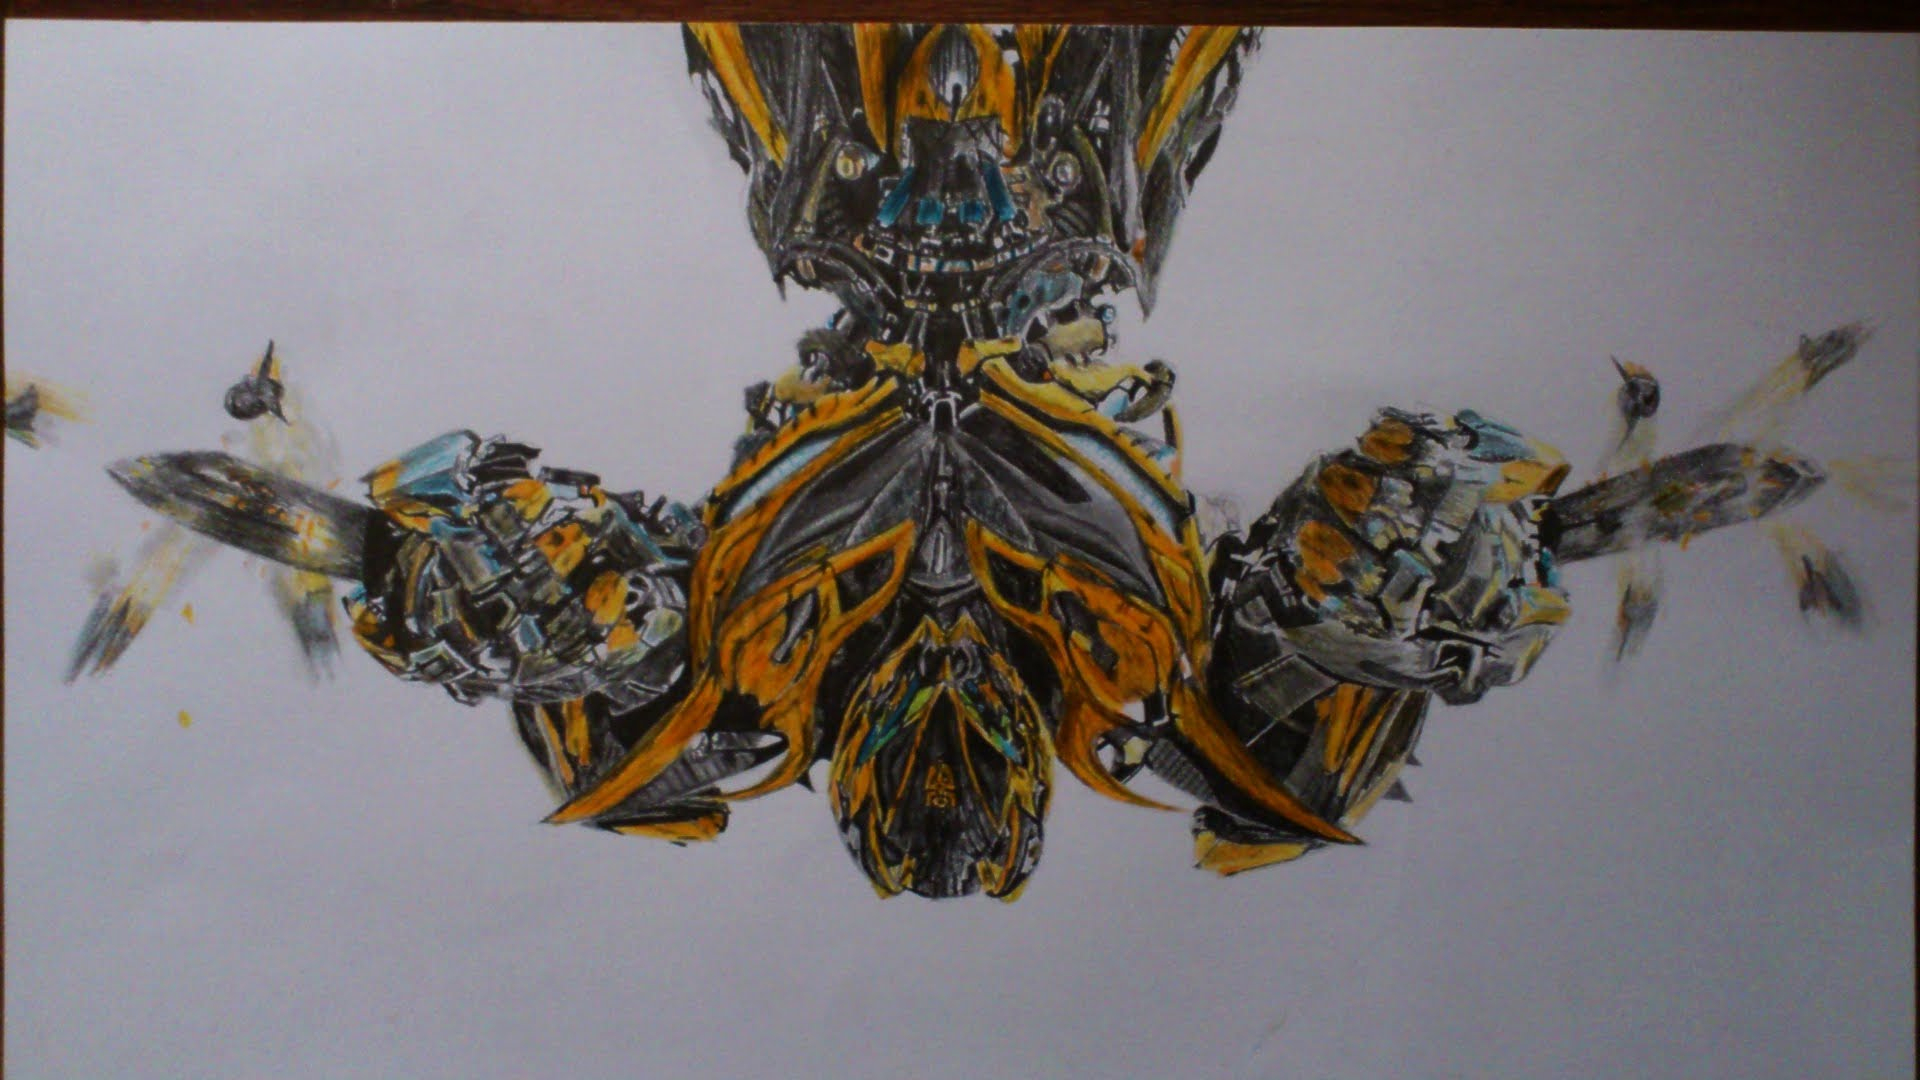 Transformers Bumblebee Sketch At Paintingvalley | Explore concernant Dessins Transformers